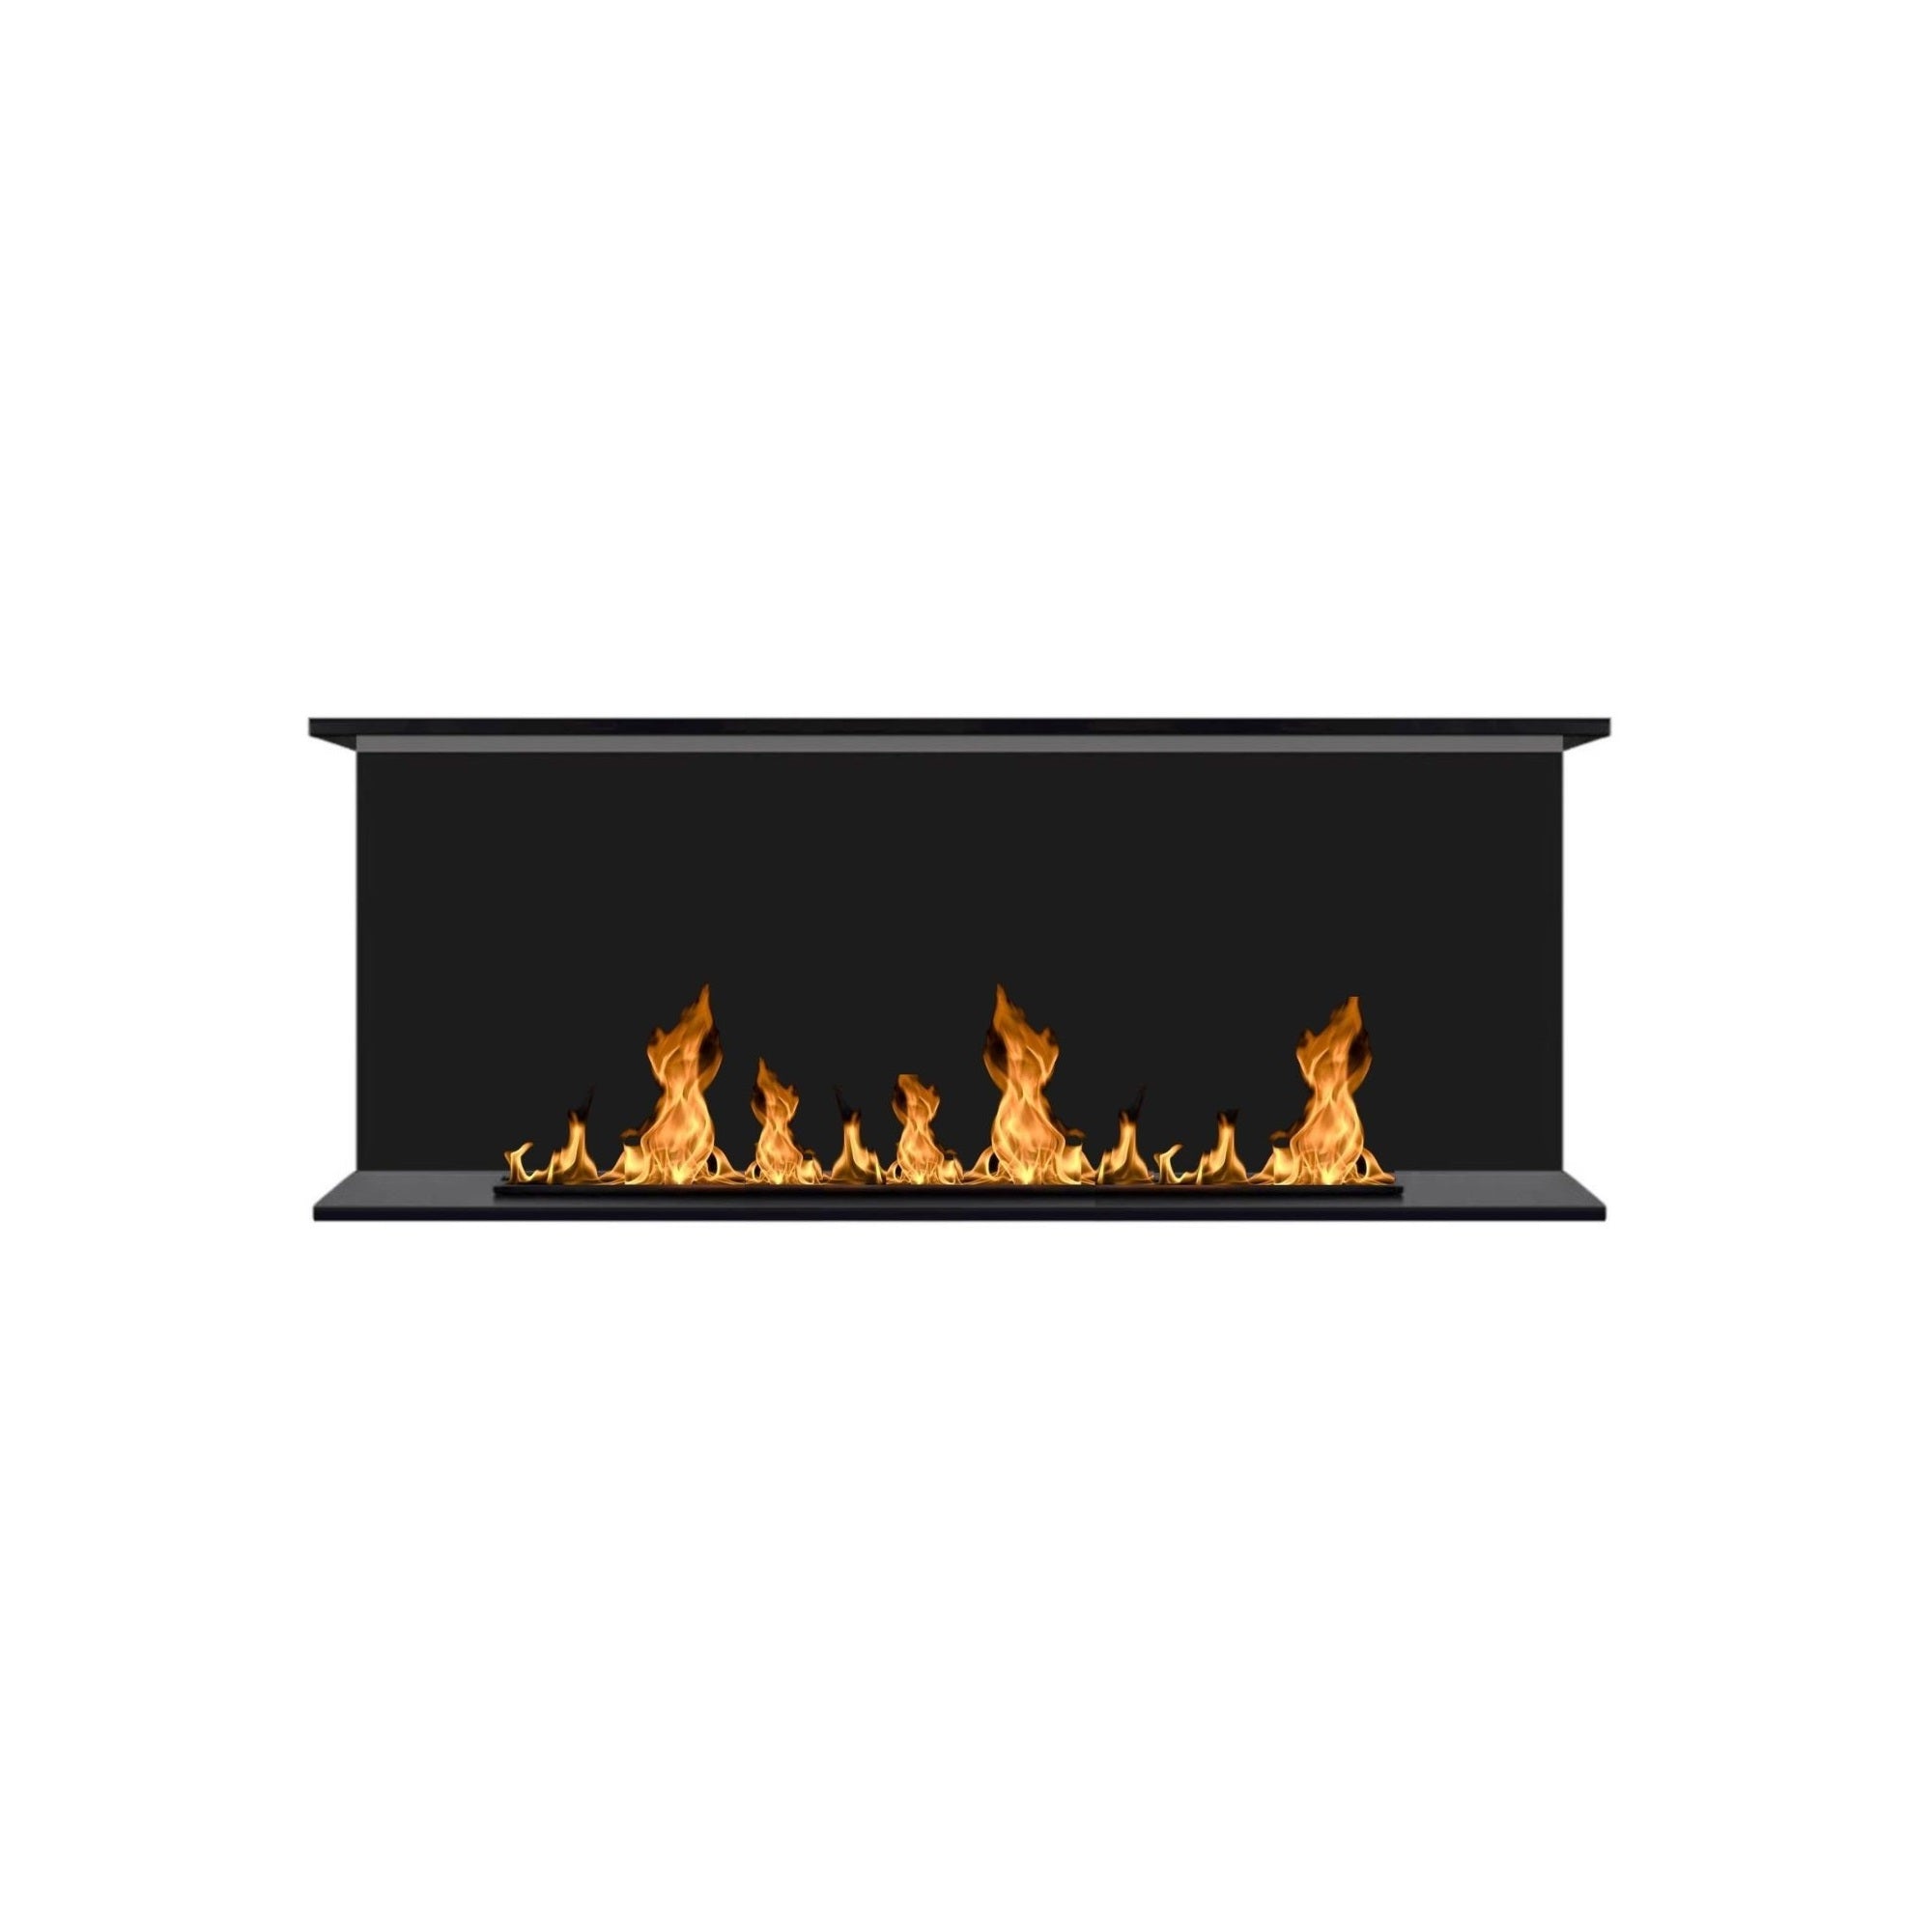 Izala Design Built-in Fireplace 90 CM